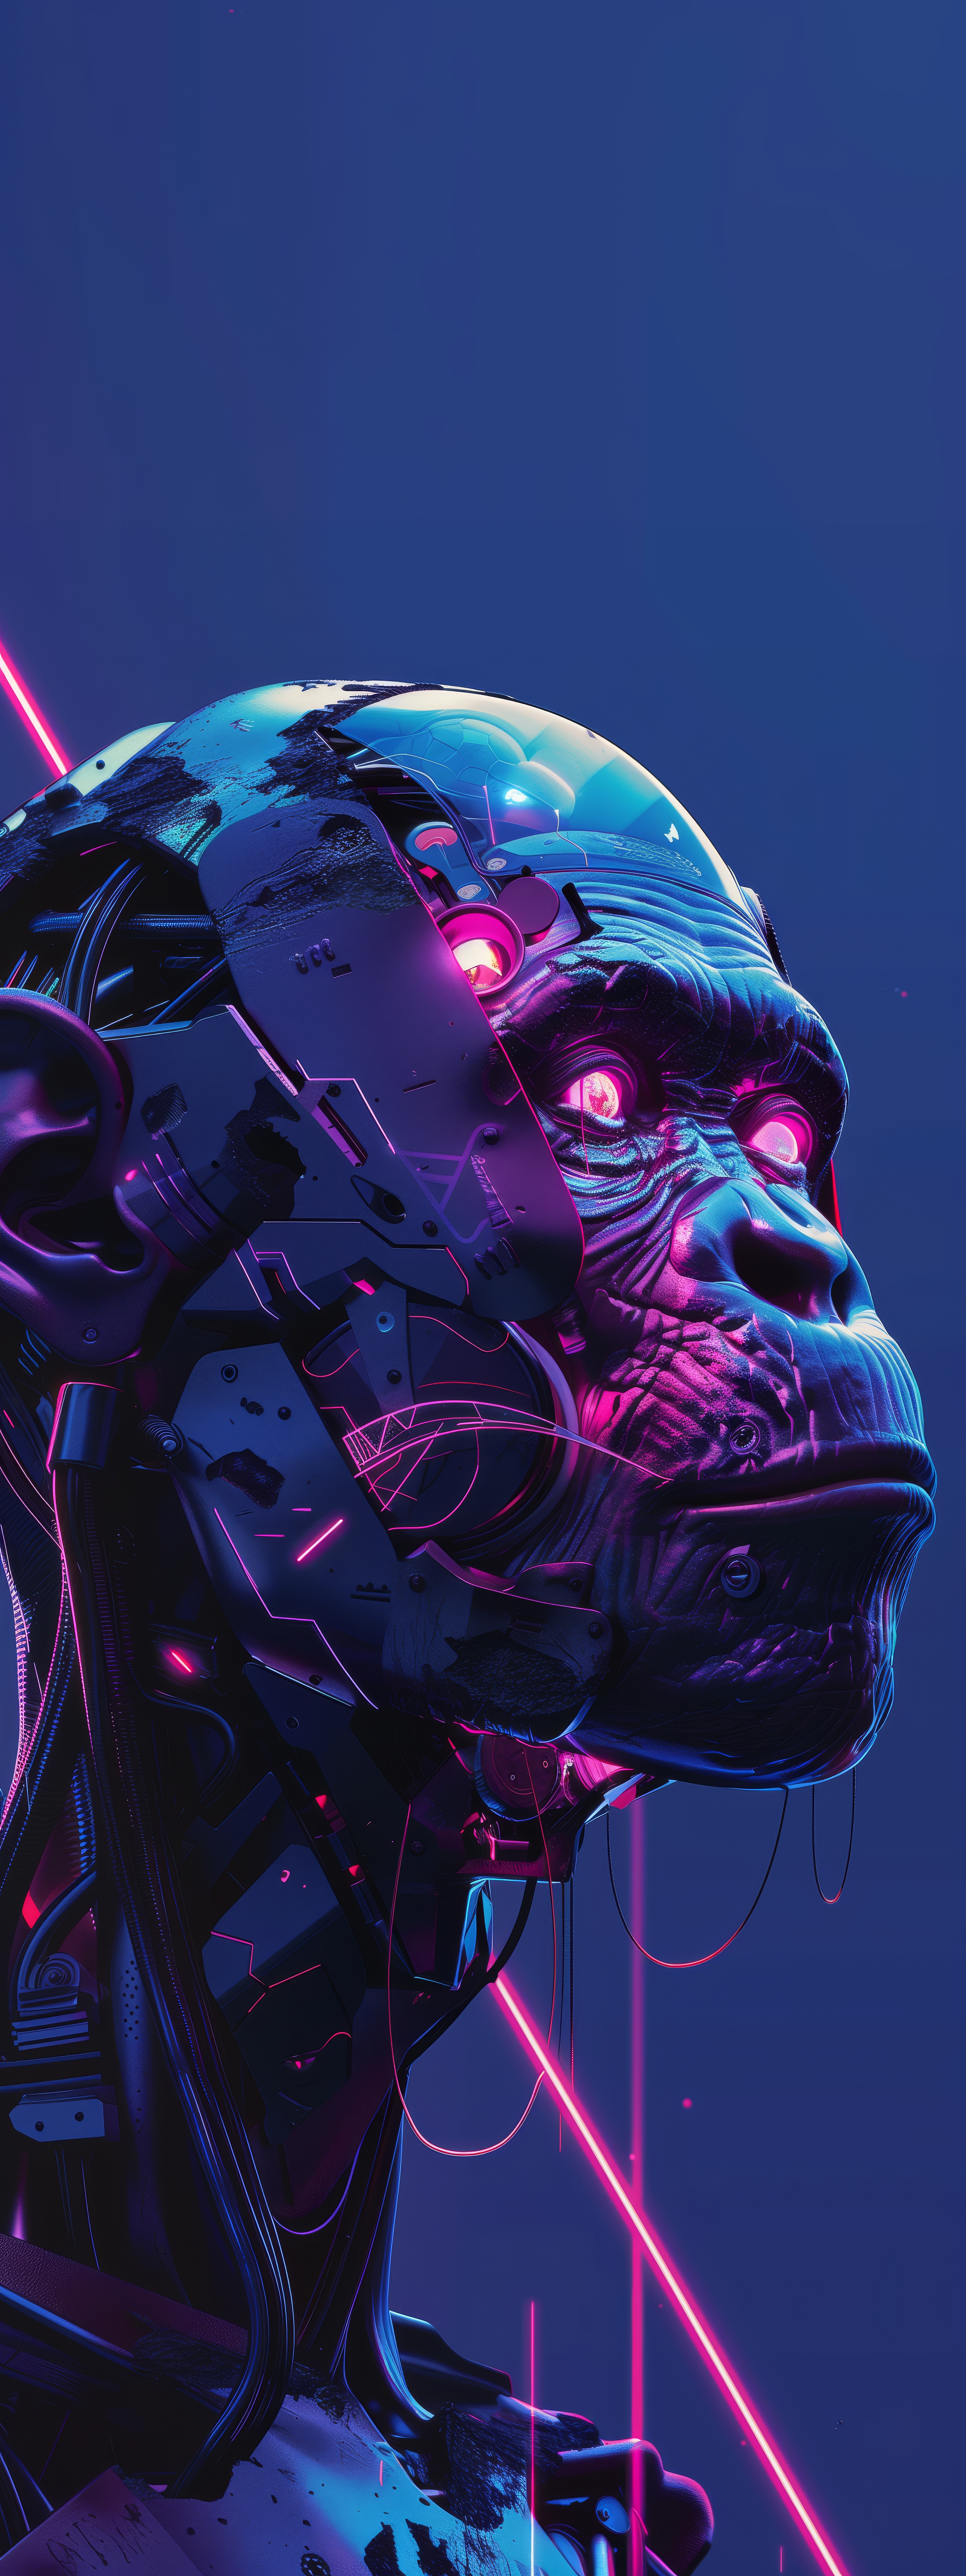 General 2688x7168 AI art portrait display neon cyberpunk Ape chimpanzees purple cyborg